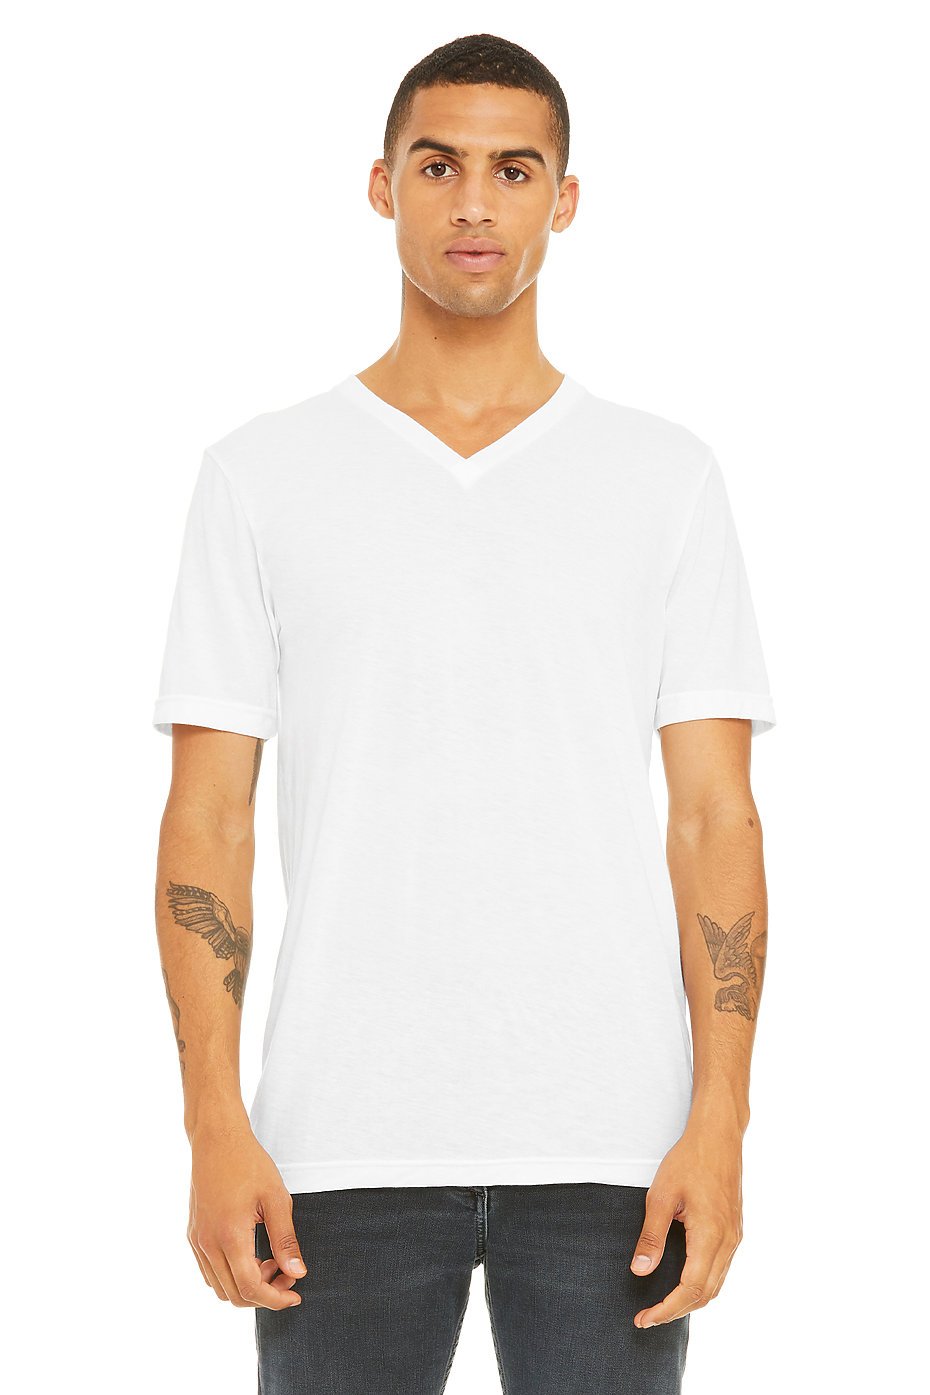 V Neck T Shirts For Men, Wholesale Unisex Clothing, Tri Blend T Shirts